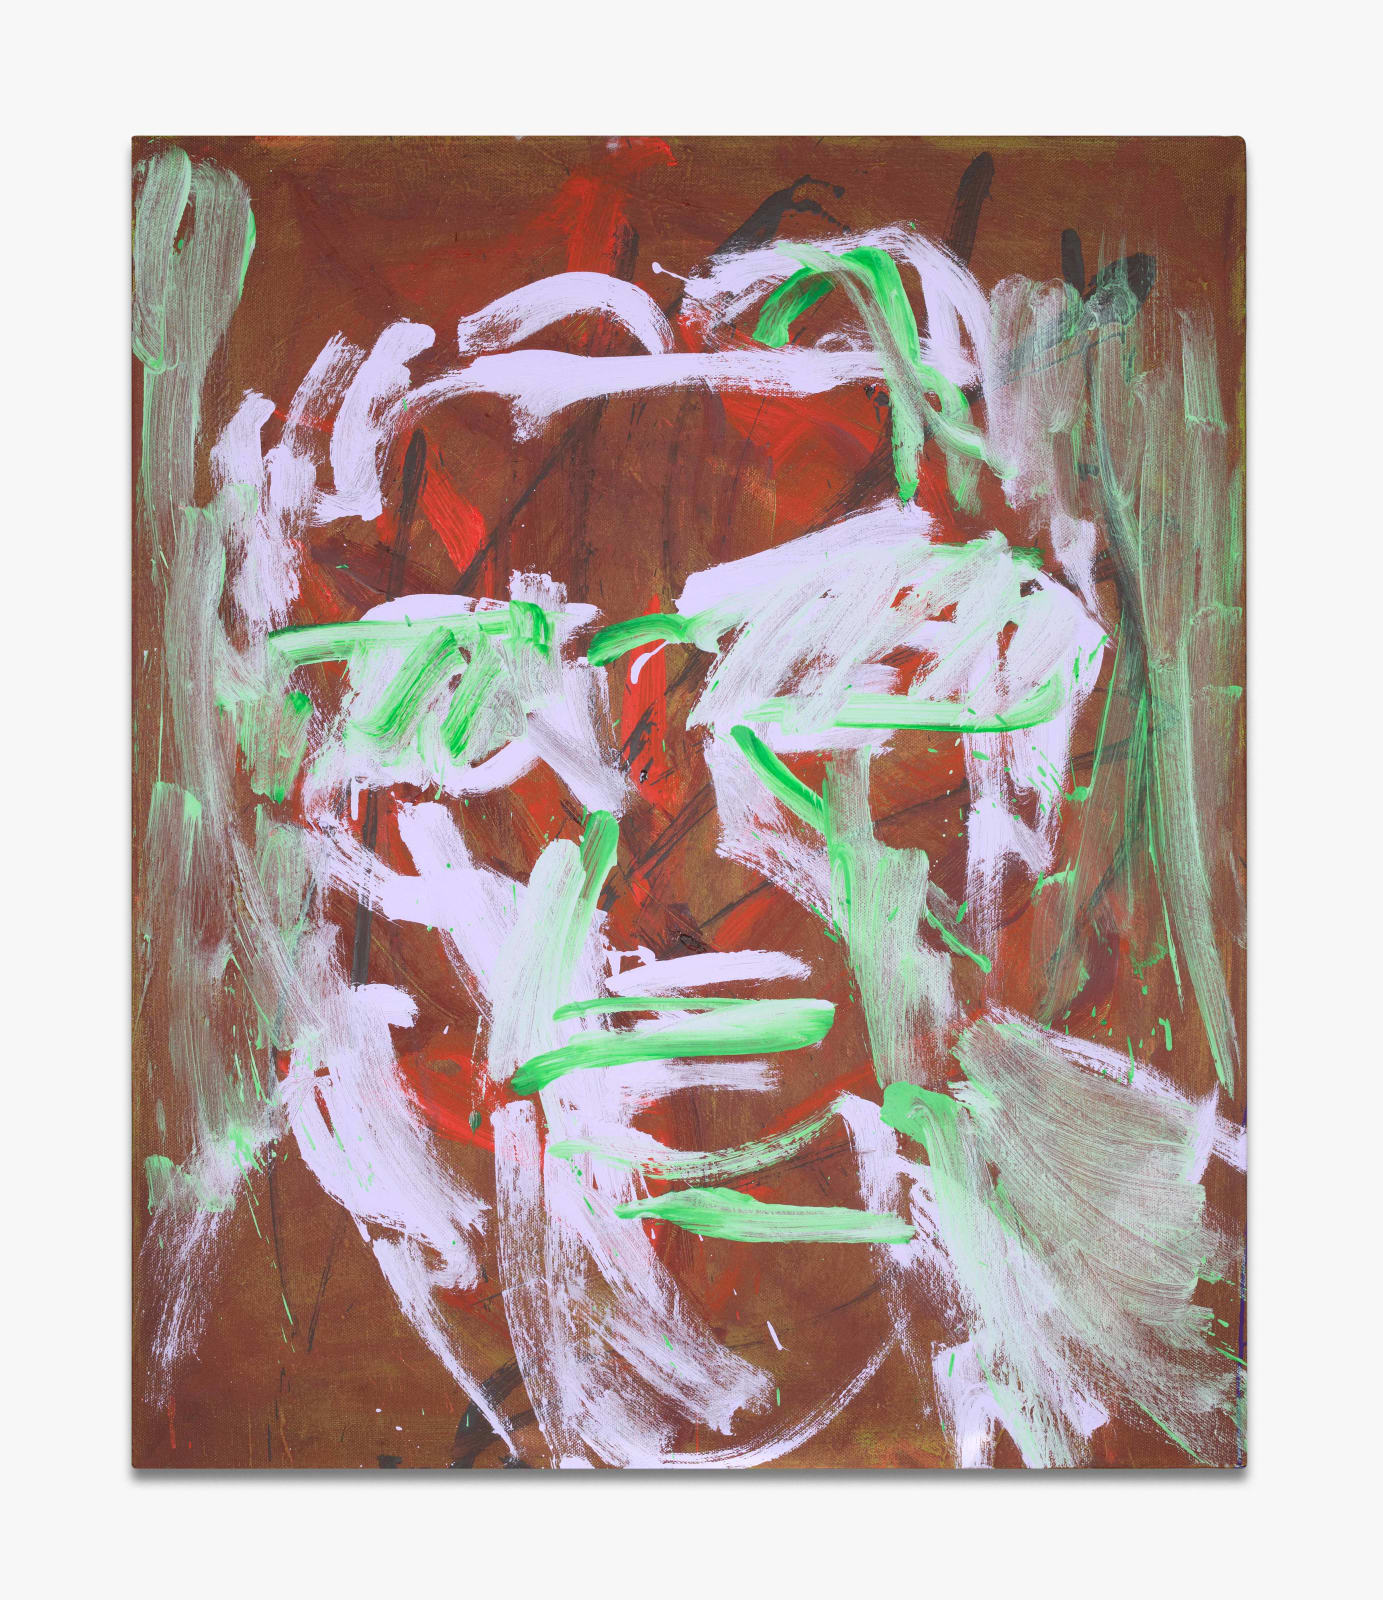 David Hominal, Self portrait, 2021